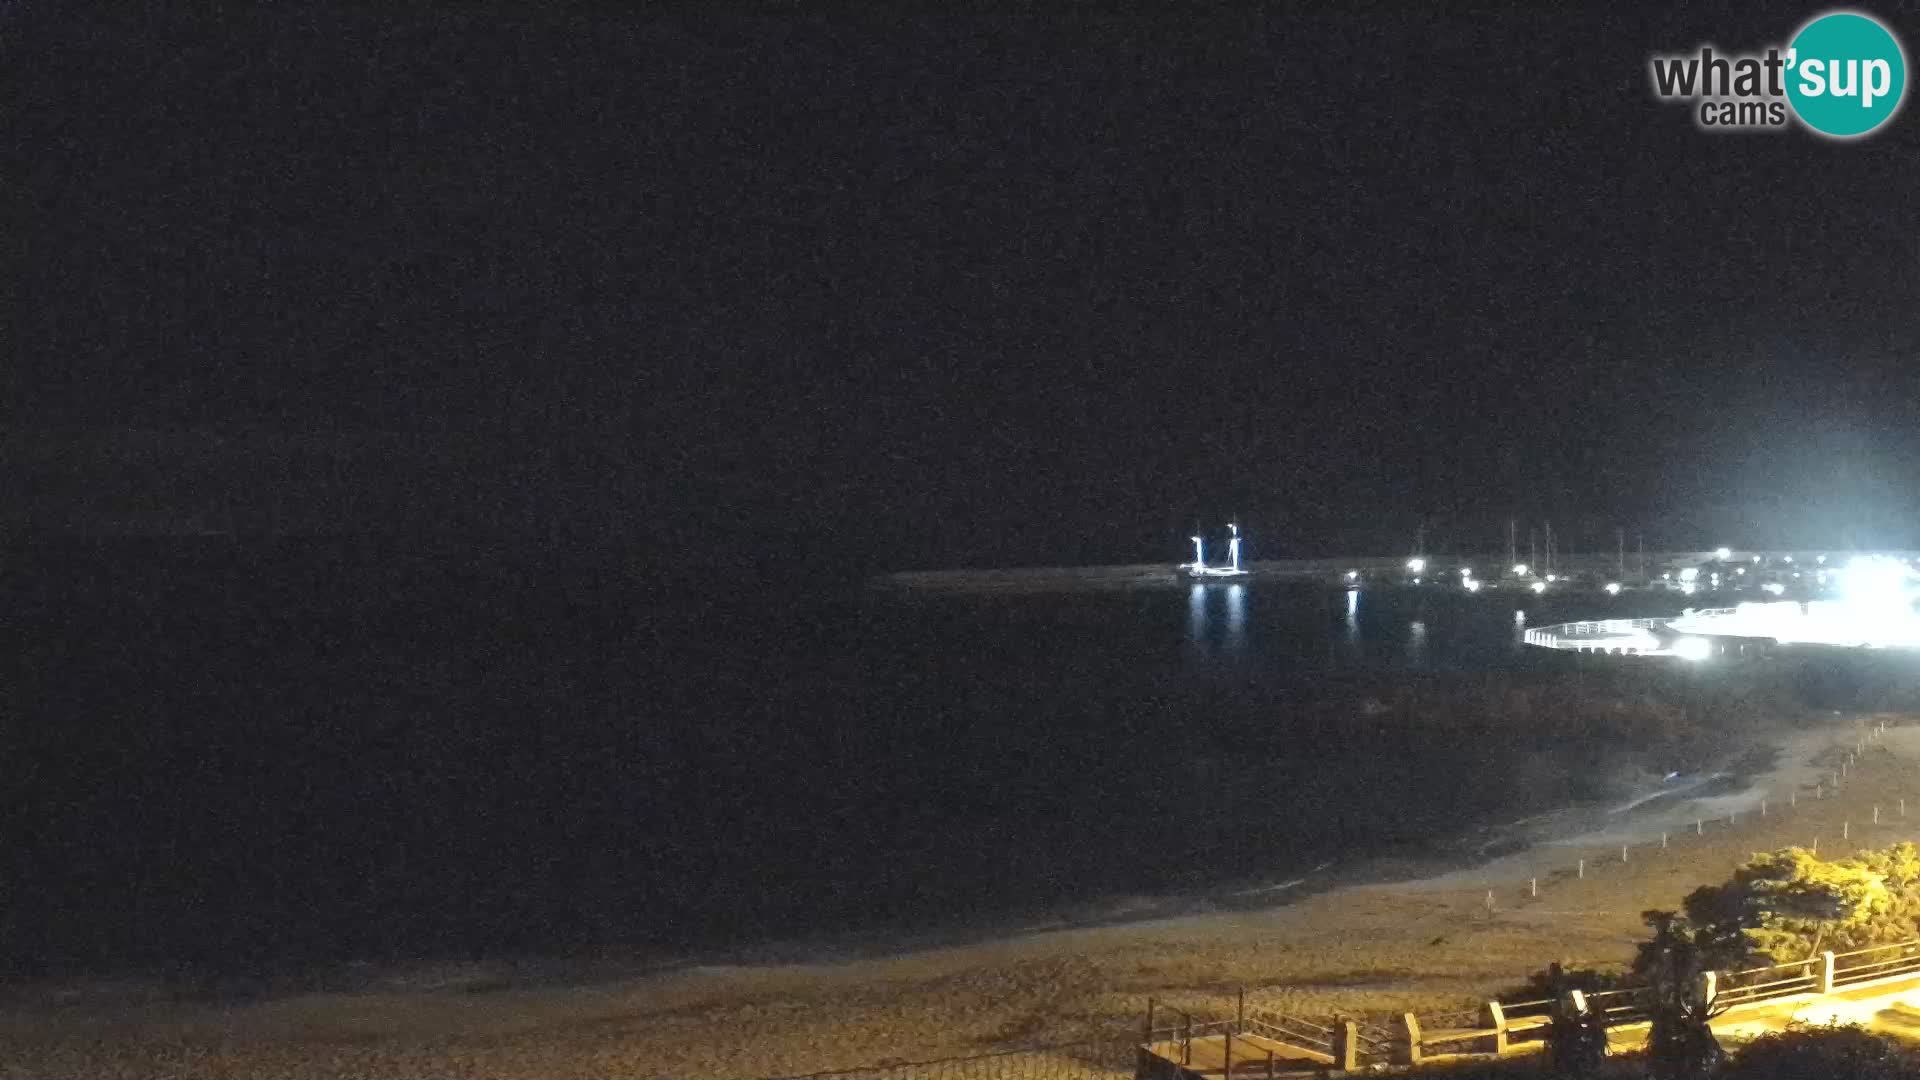 Beach Isola Rossa Webcam – Live View of Sardegna’s Stunning Shoreline